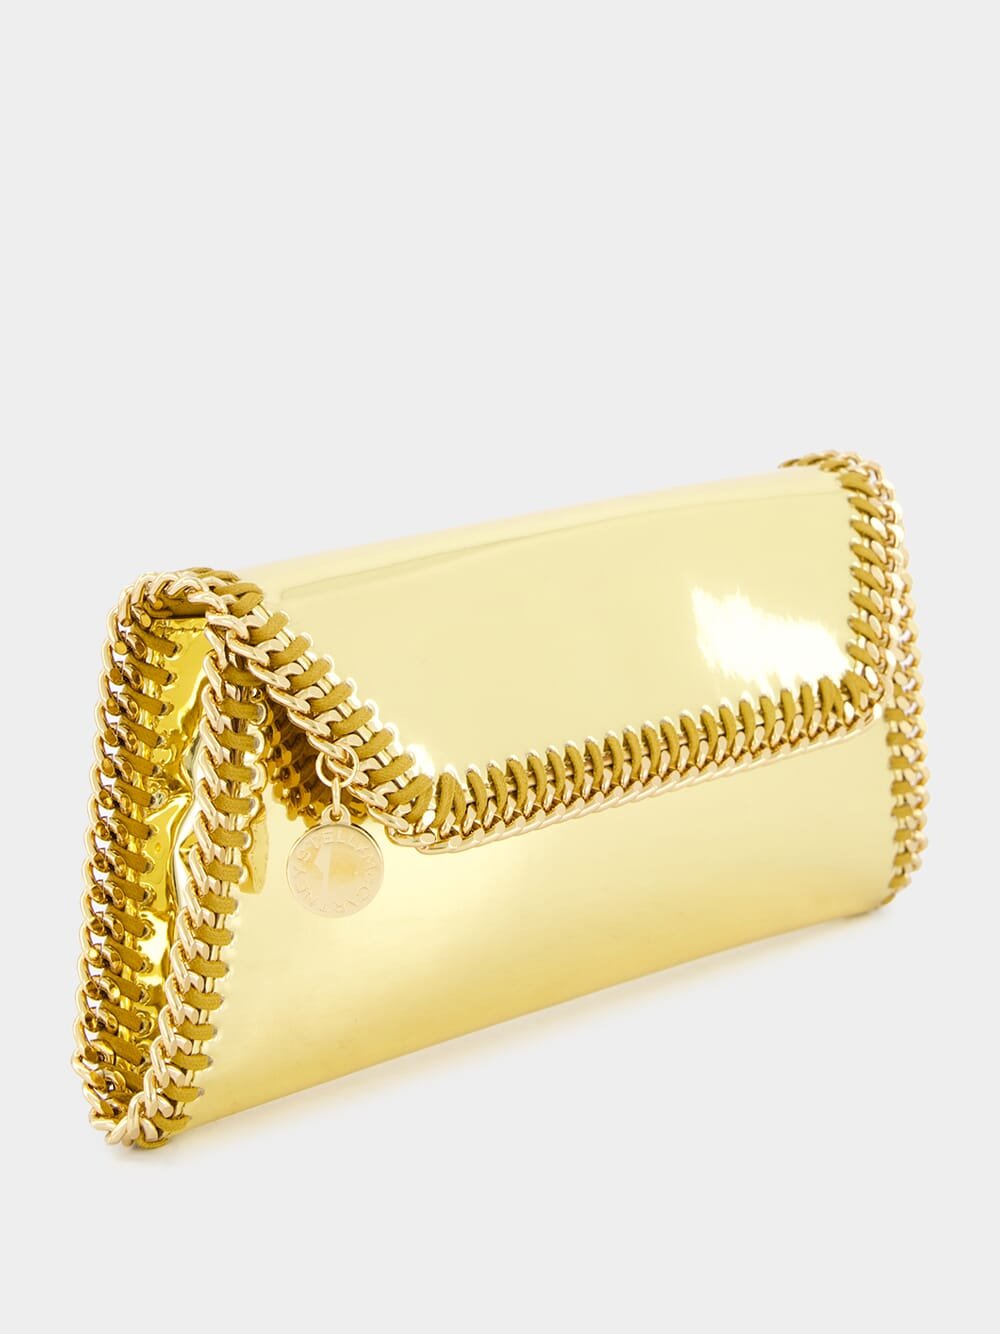 Stella McCartneyFalabella Mirrored Chain-Trimme Clutch Bag at Fashion Clinic